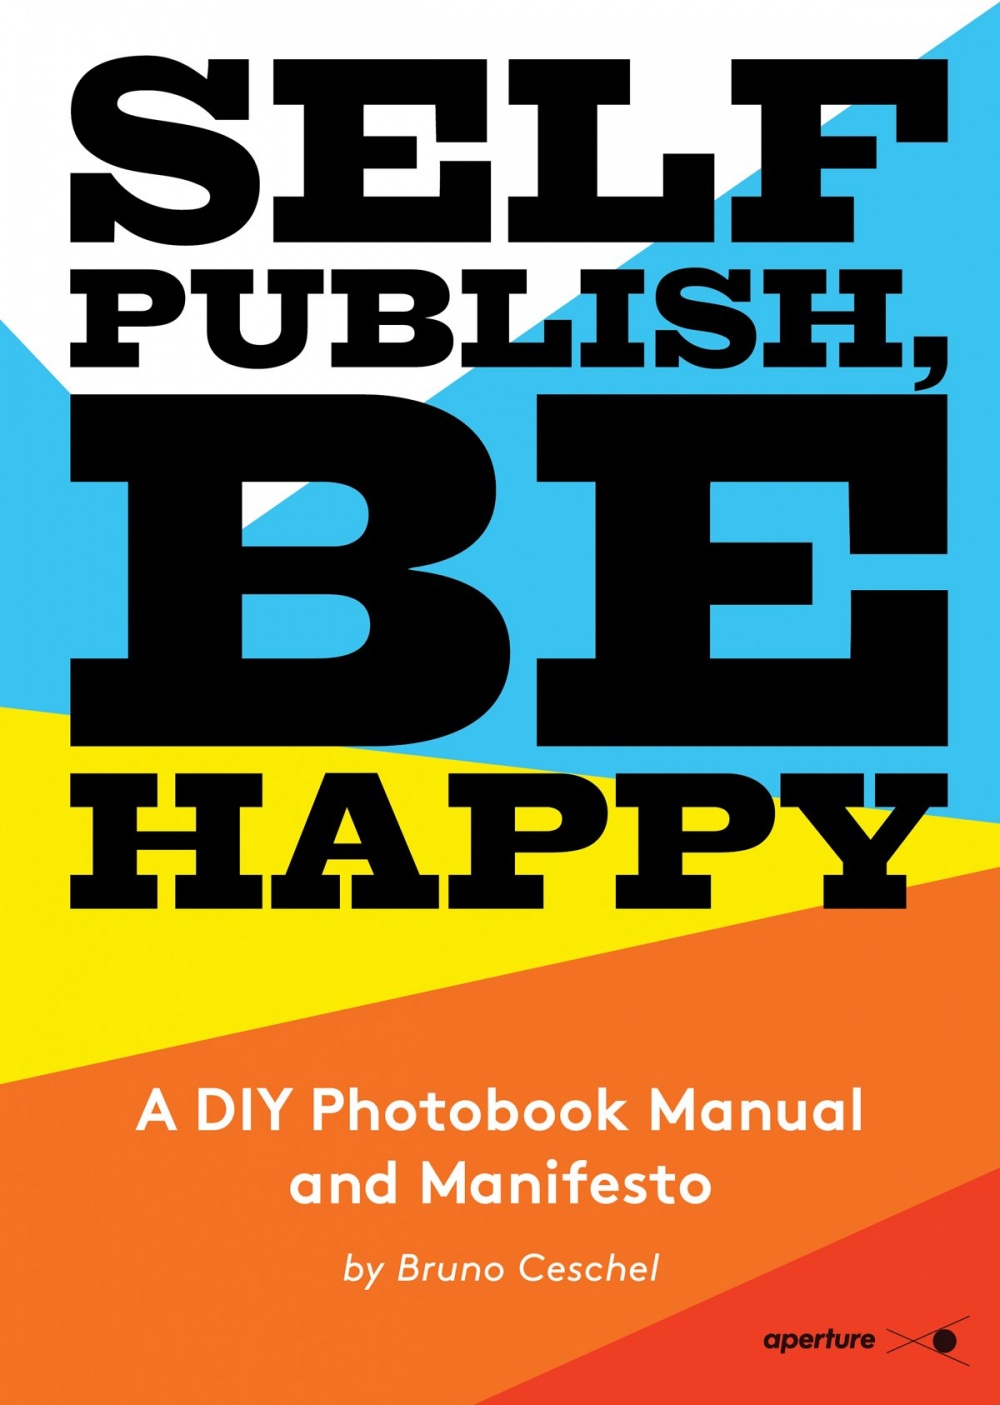 self publish, be happy